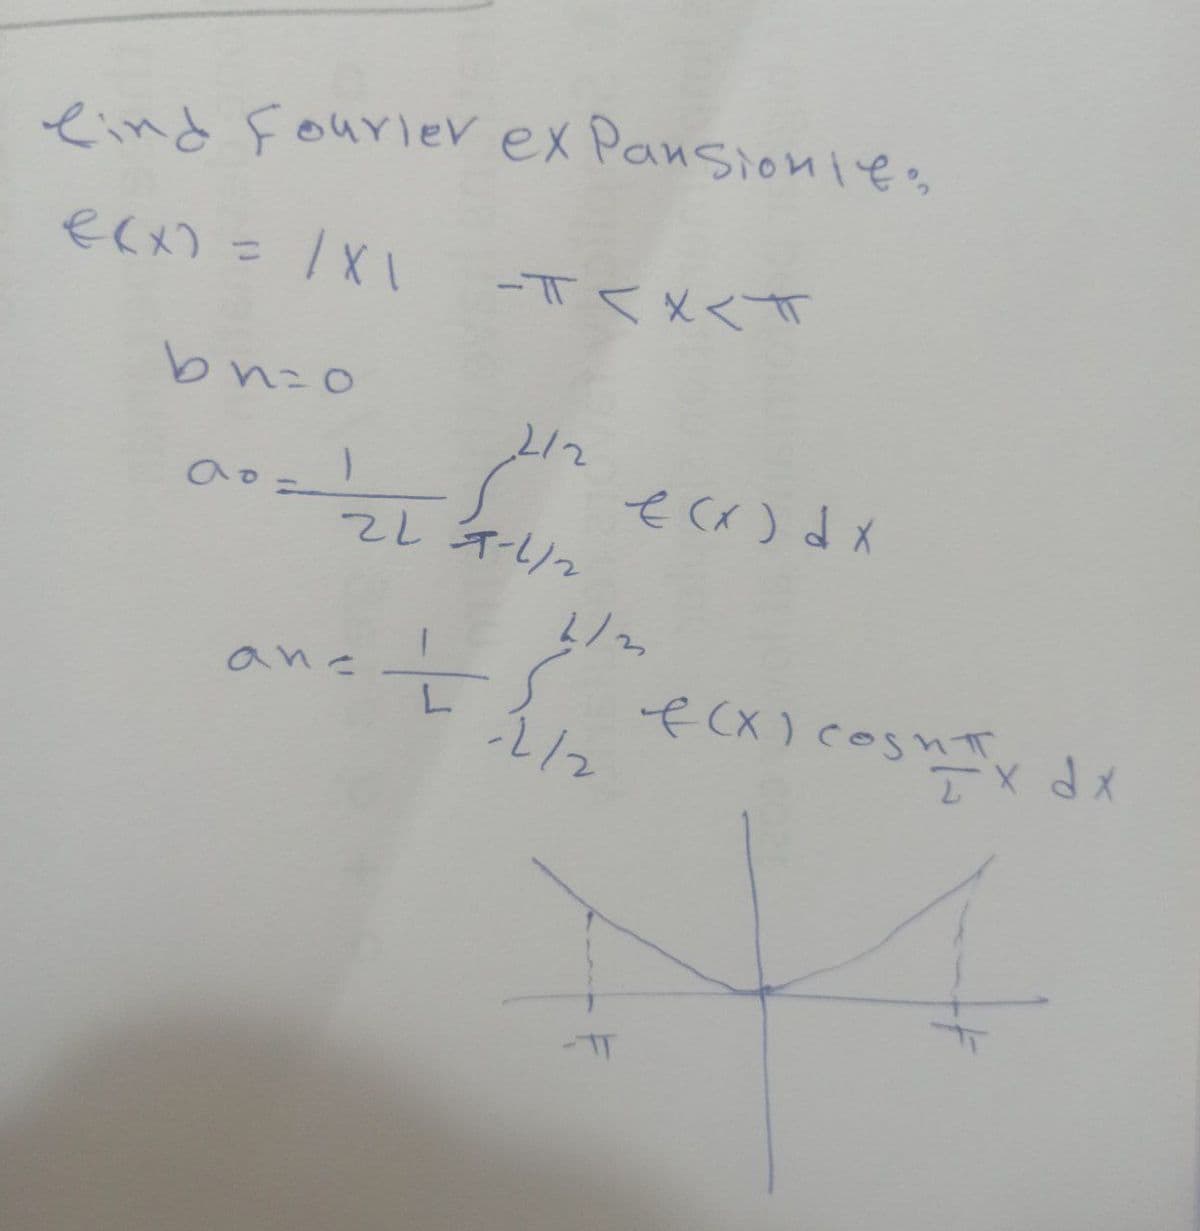 Lind Fourier ex Pansionie.
€(x) = /X1
bn=0
ао
arth earsax
(x) dx
21 3-1/2
-T< X<T
ane
1/2
= { e(x) countx dx
cosm
2/2
14
F